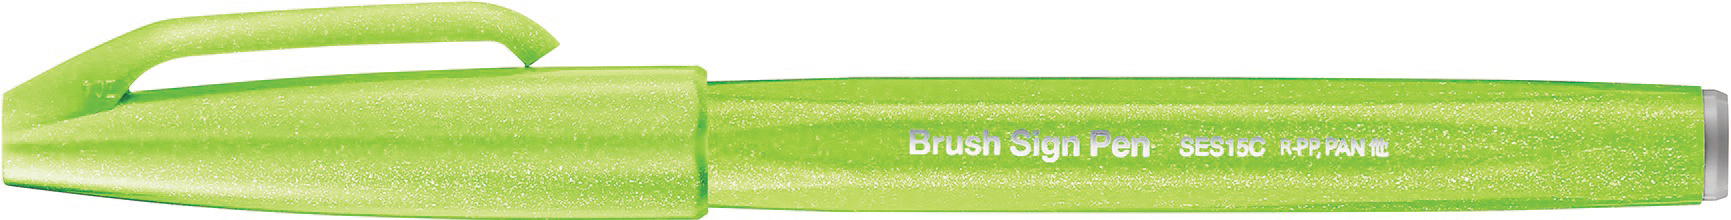 PENTEL Brush Sign Pen SES15C-K vert bourgeon